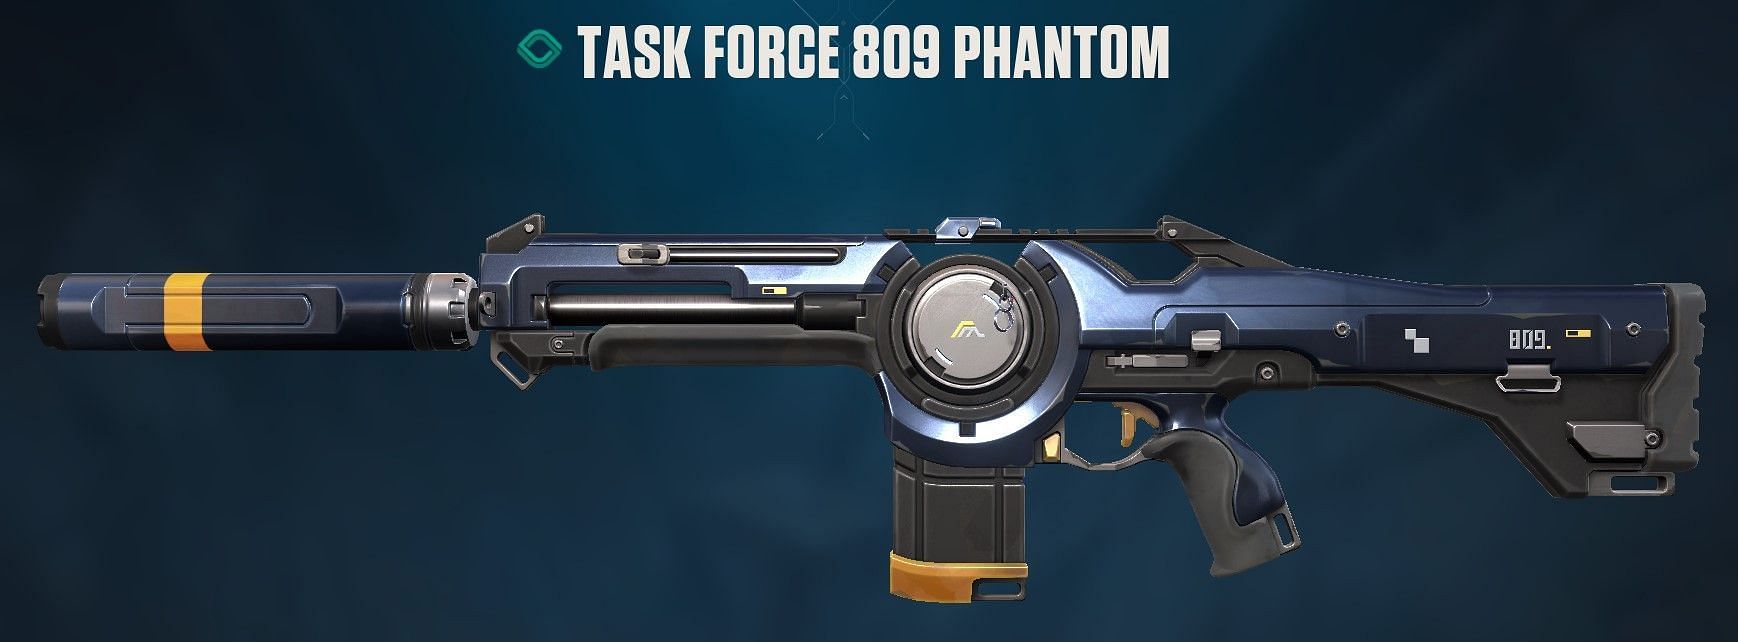 Task Force 809 Phantom (Image via Riot Games)